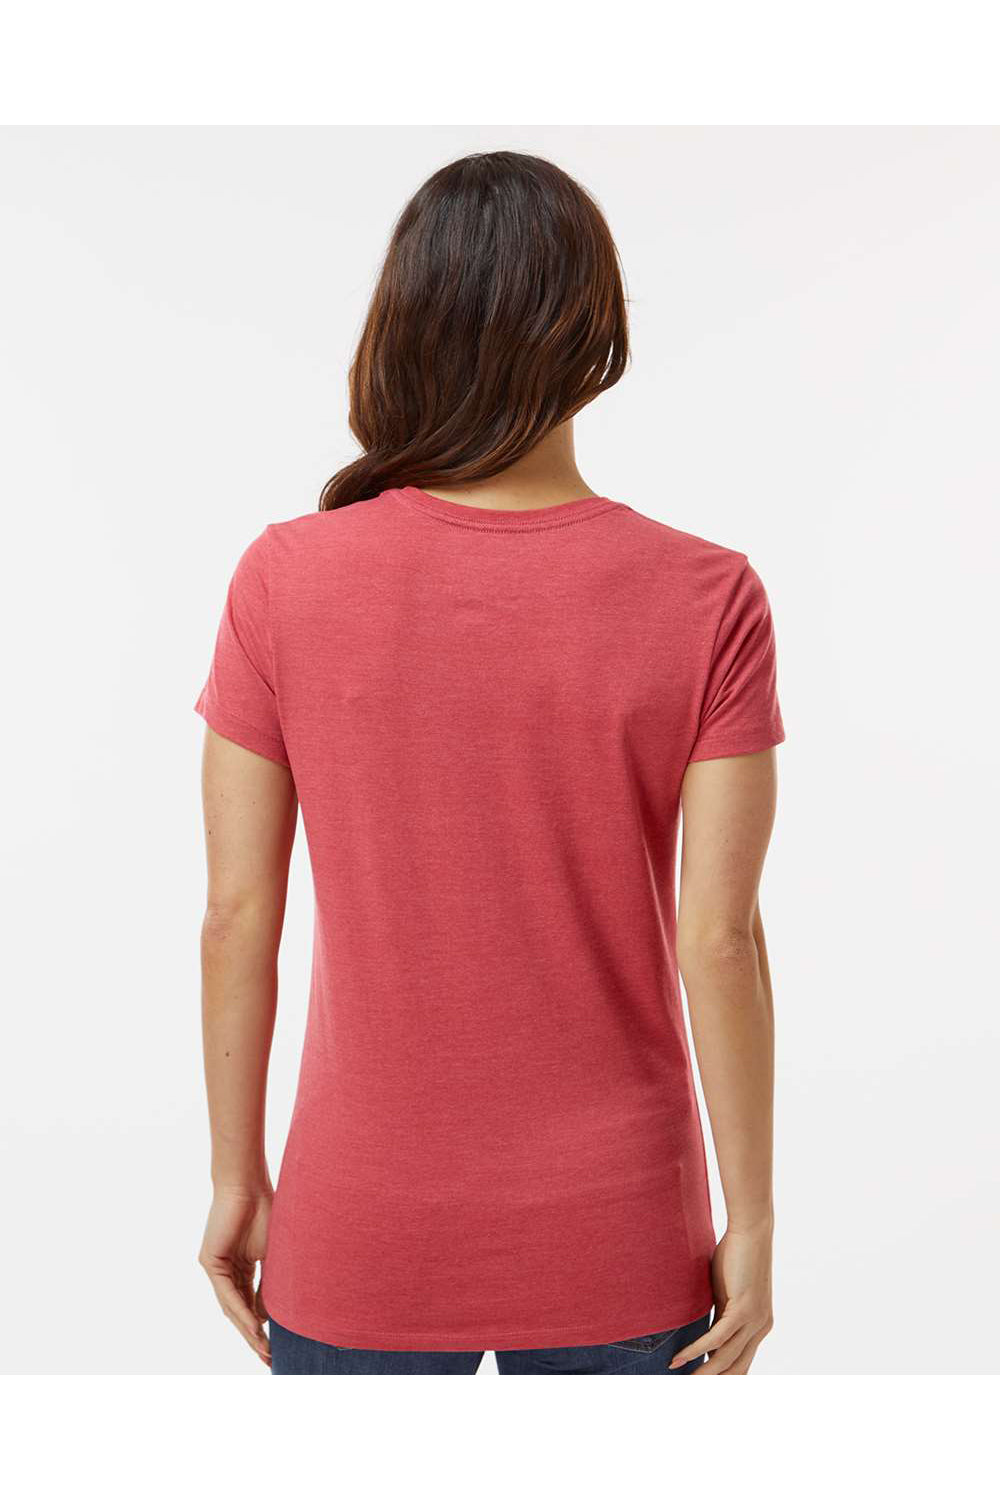 Kastlfel 2021 Womens RecycledSoft Short Sleeve Crewneck T-Shirt Red Model Back